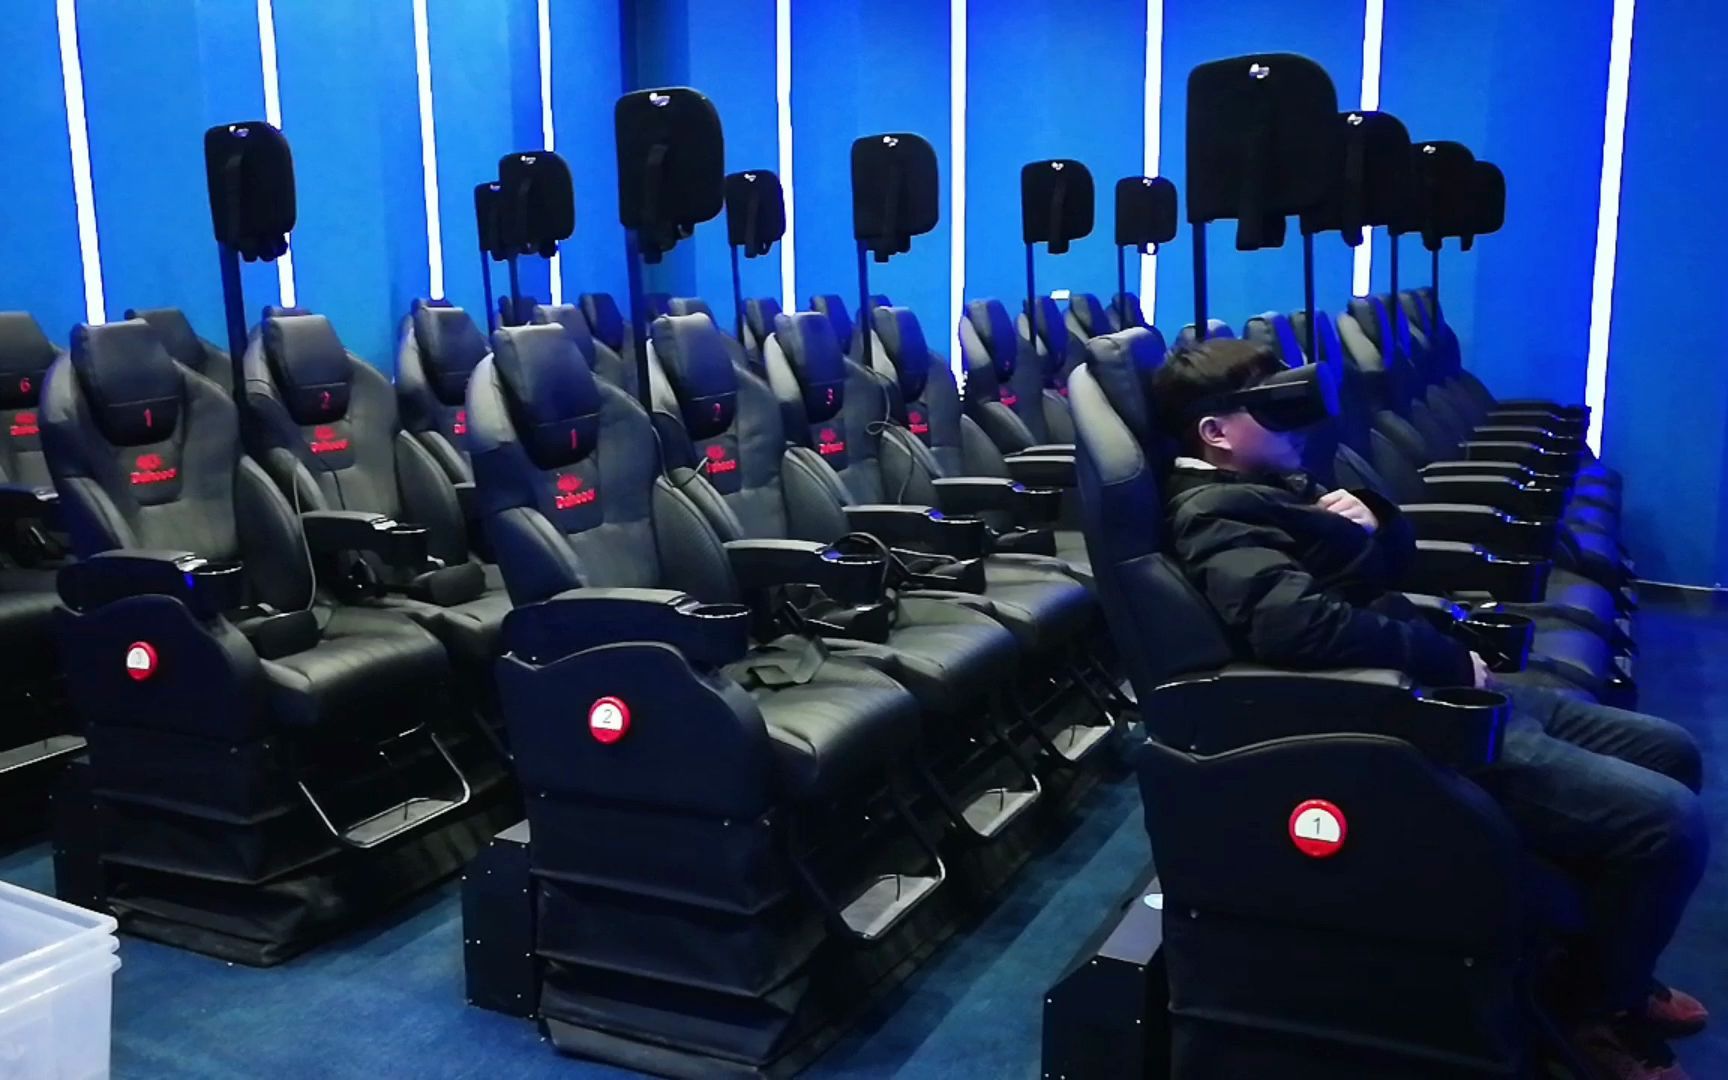 VR影厅动感座椅设备同步播放体验科技馆VR影院设备展示体验视频刺激真实